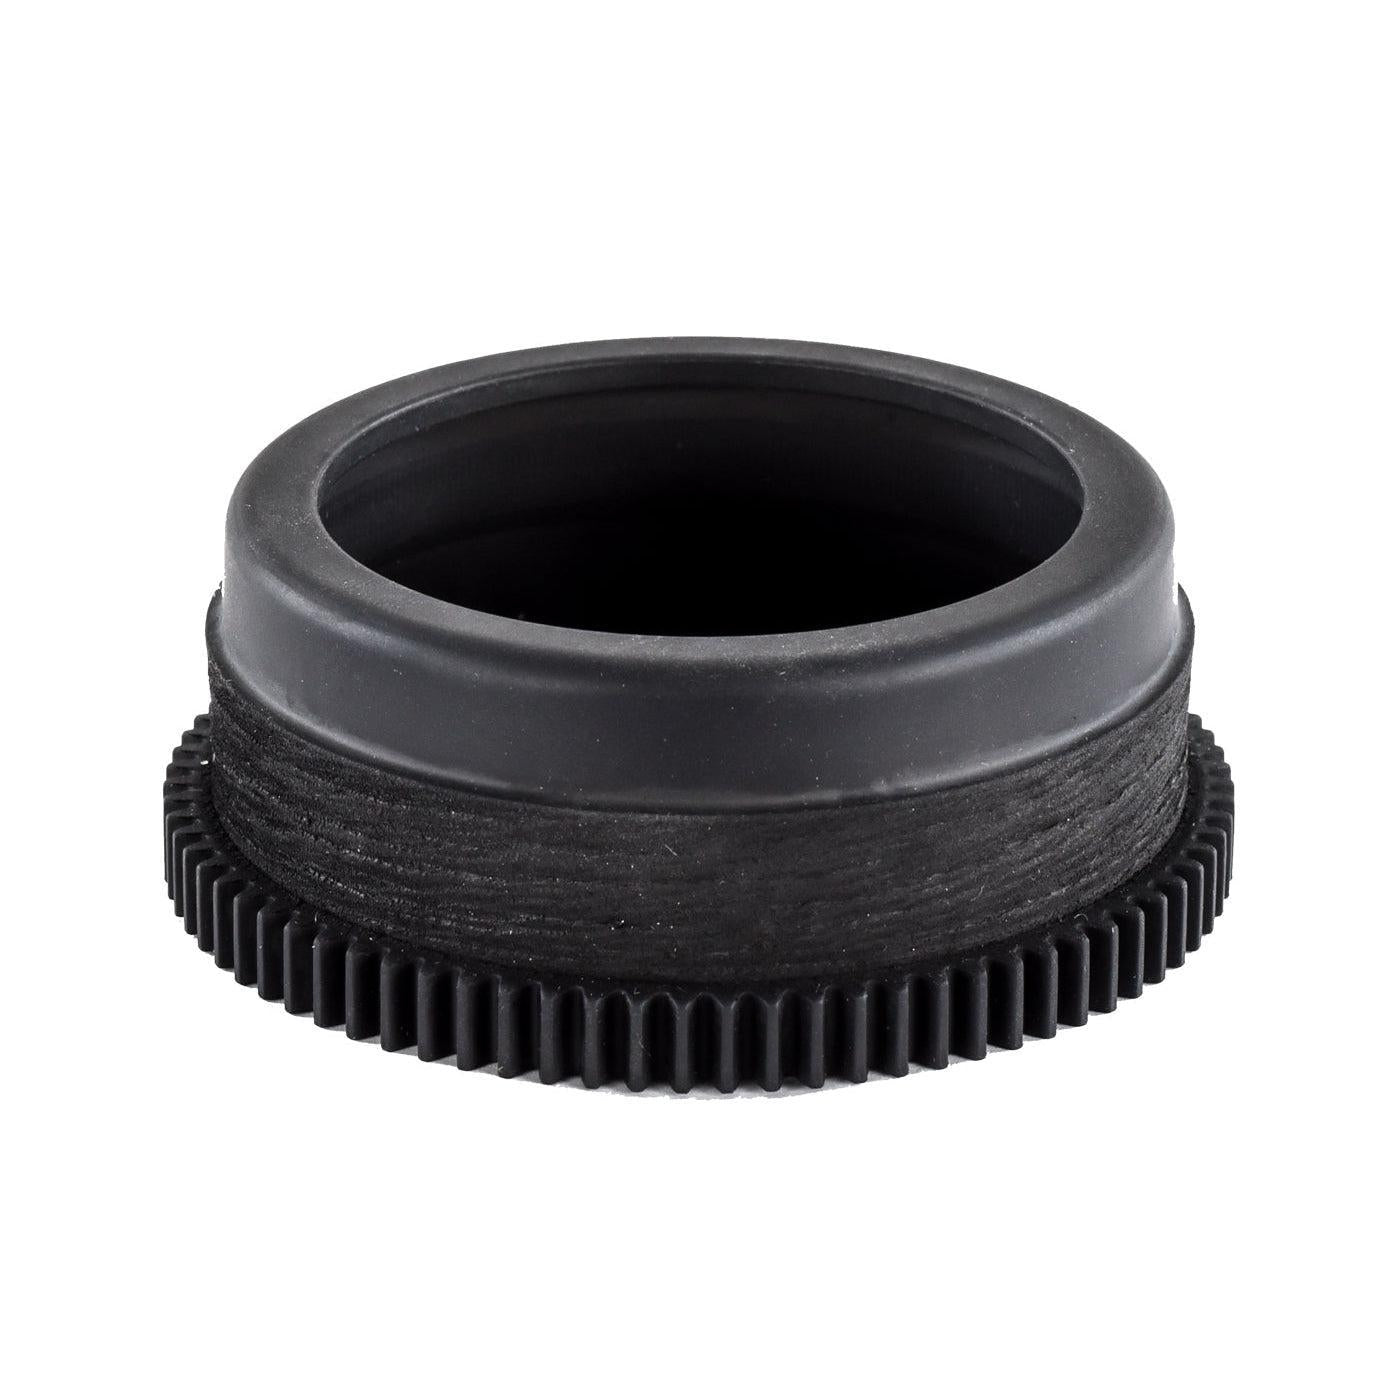 Fantasea Lens Gear SELP1650-